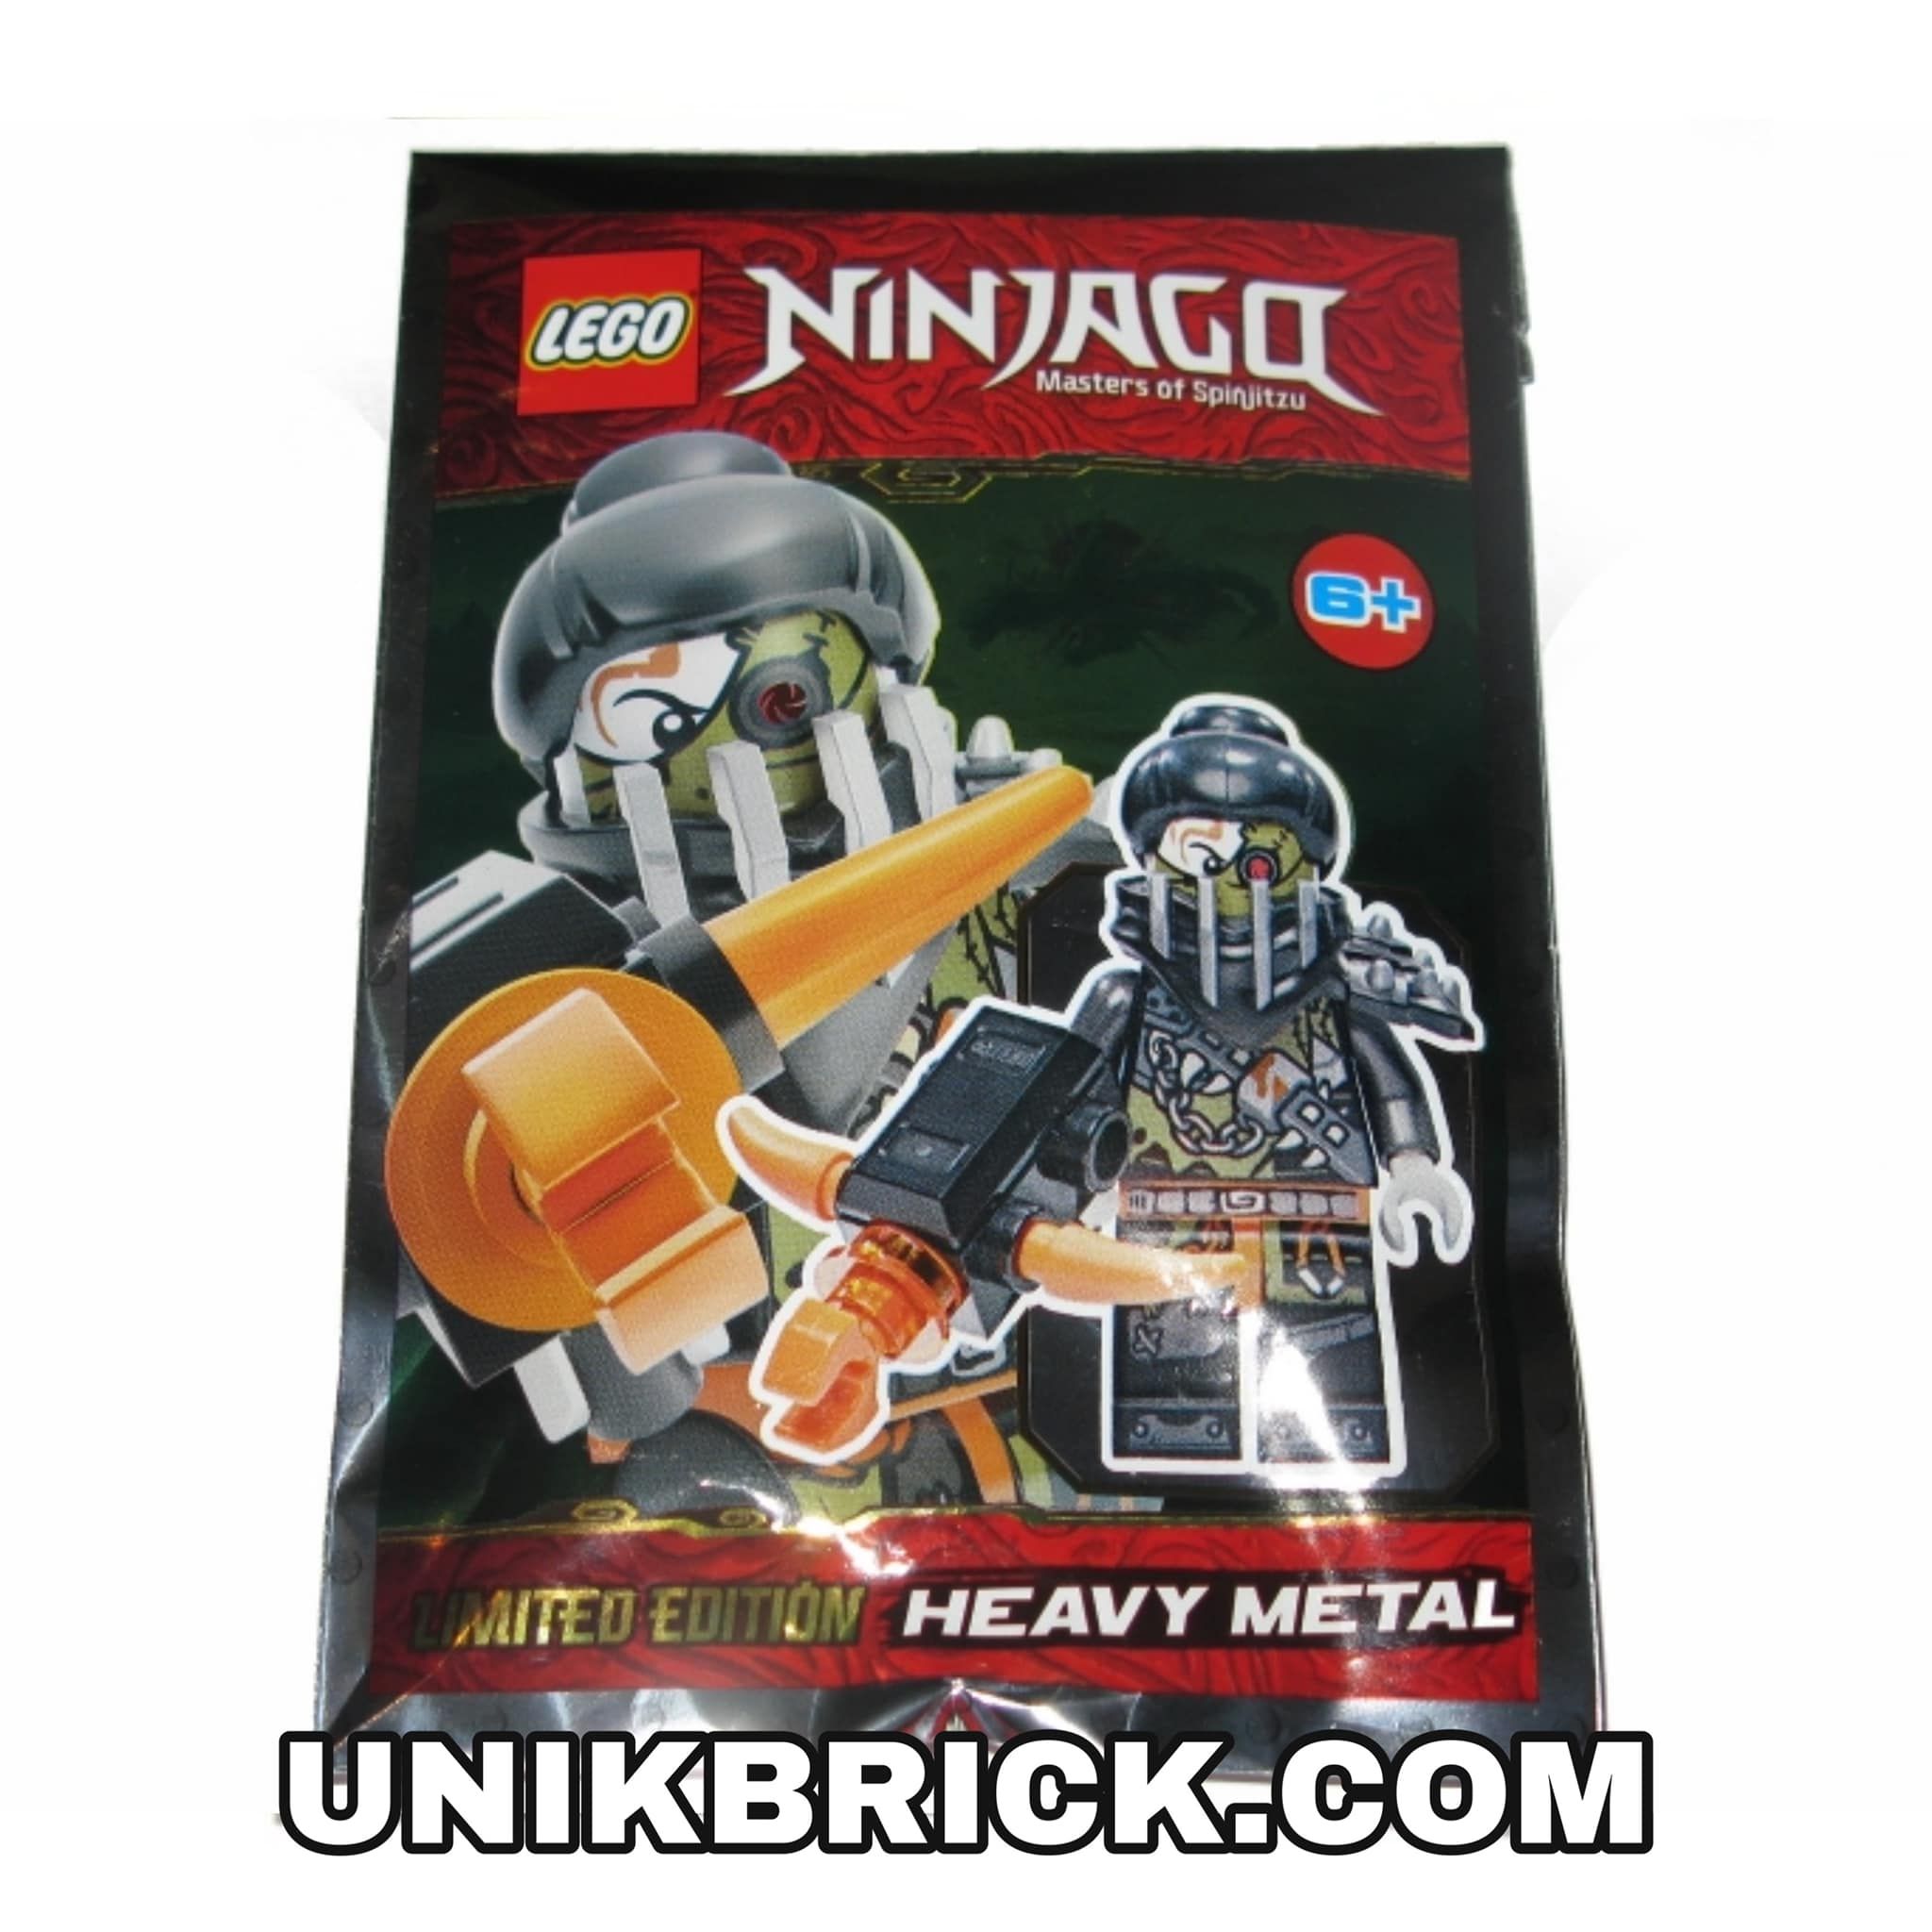 LEGO Ninjago 891947 Heavy Metal Foil Pack Polybag